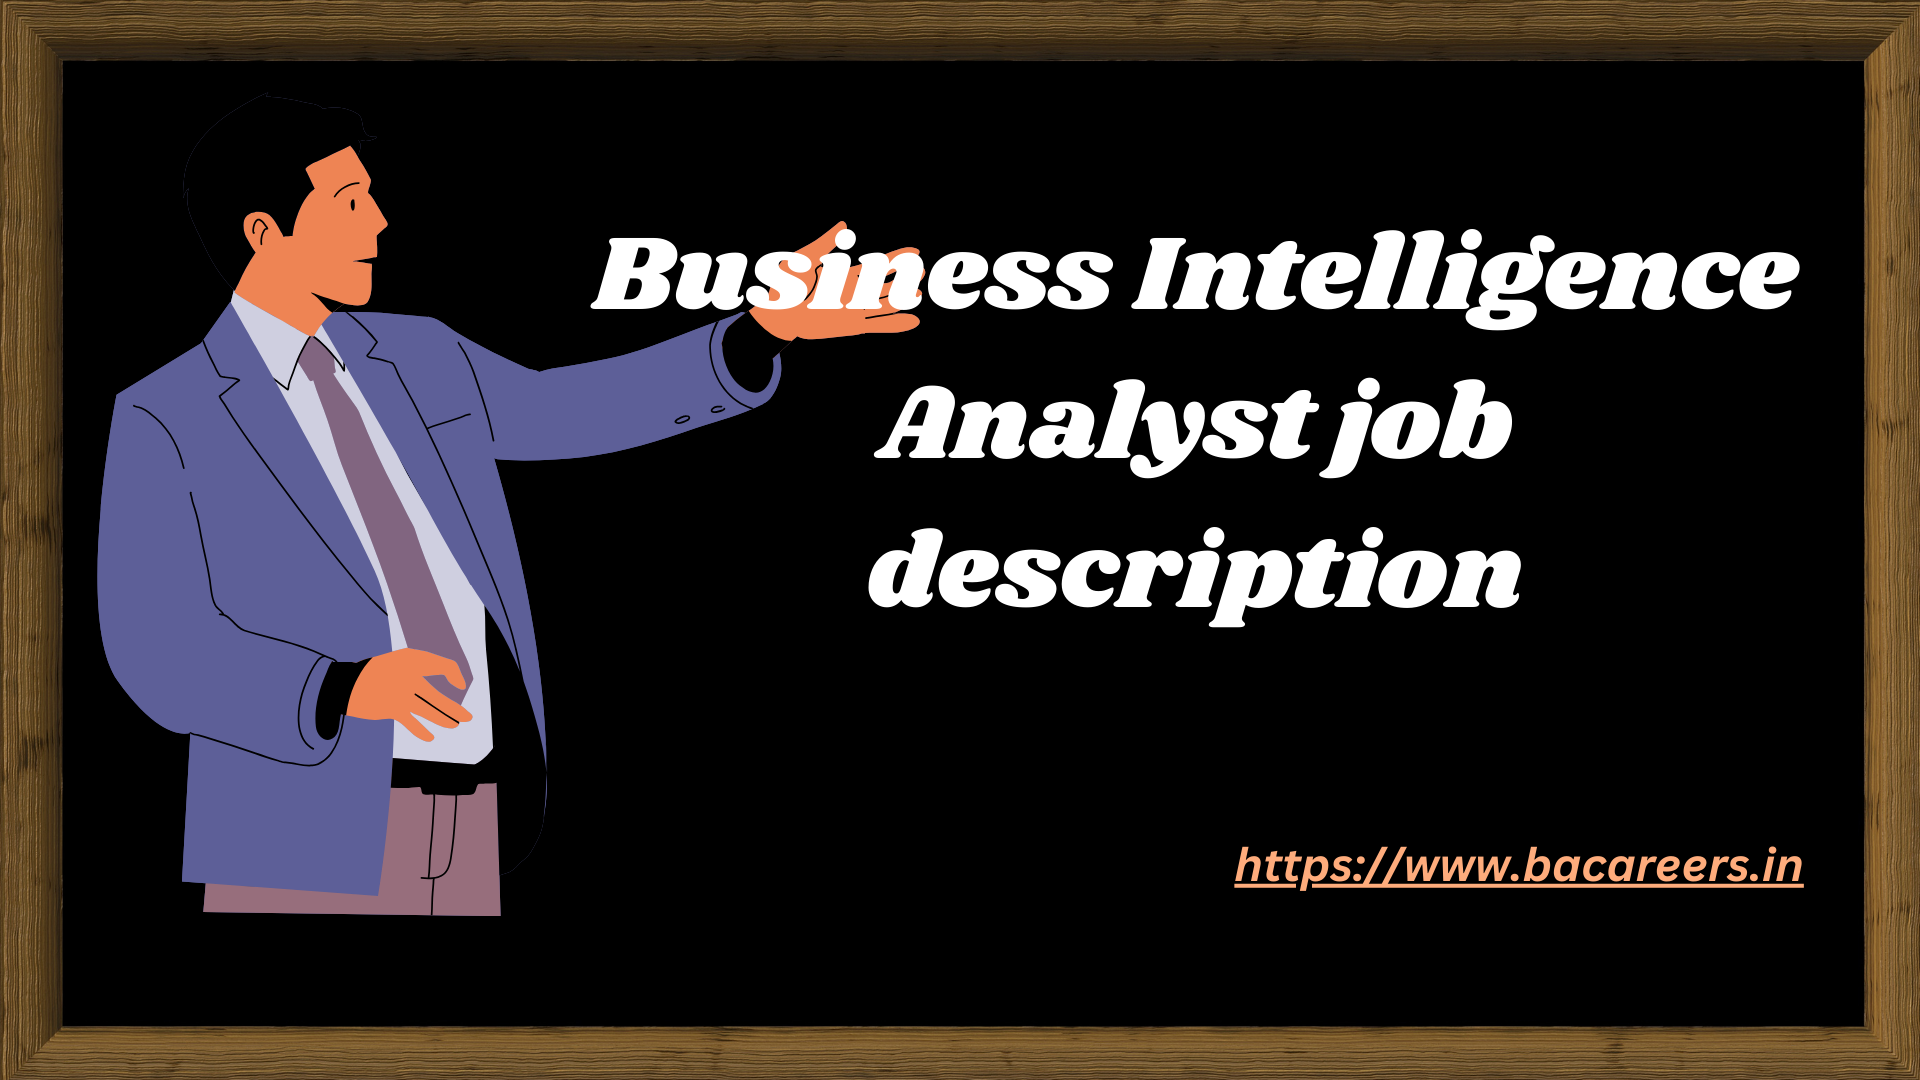 Business Intelligence Analyst job description